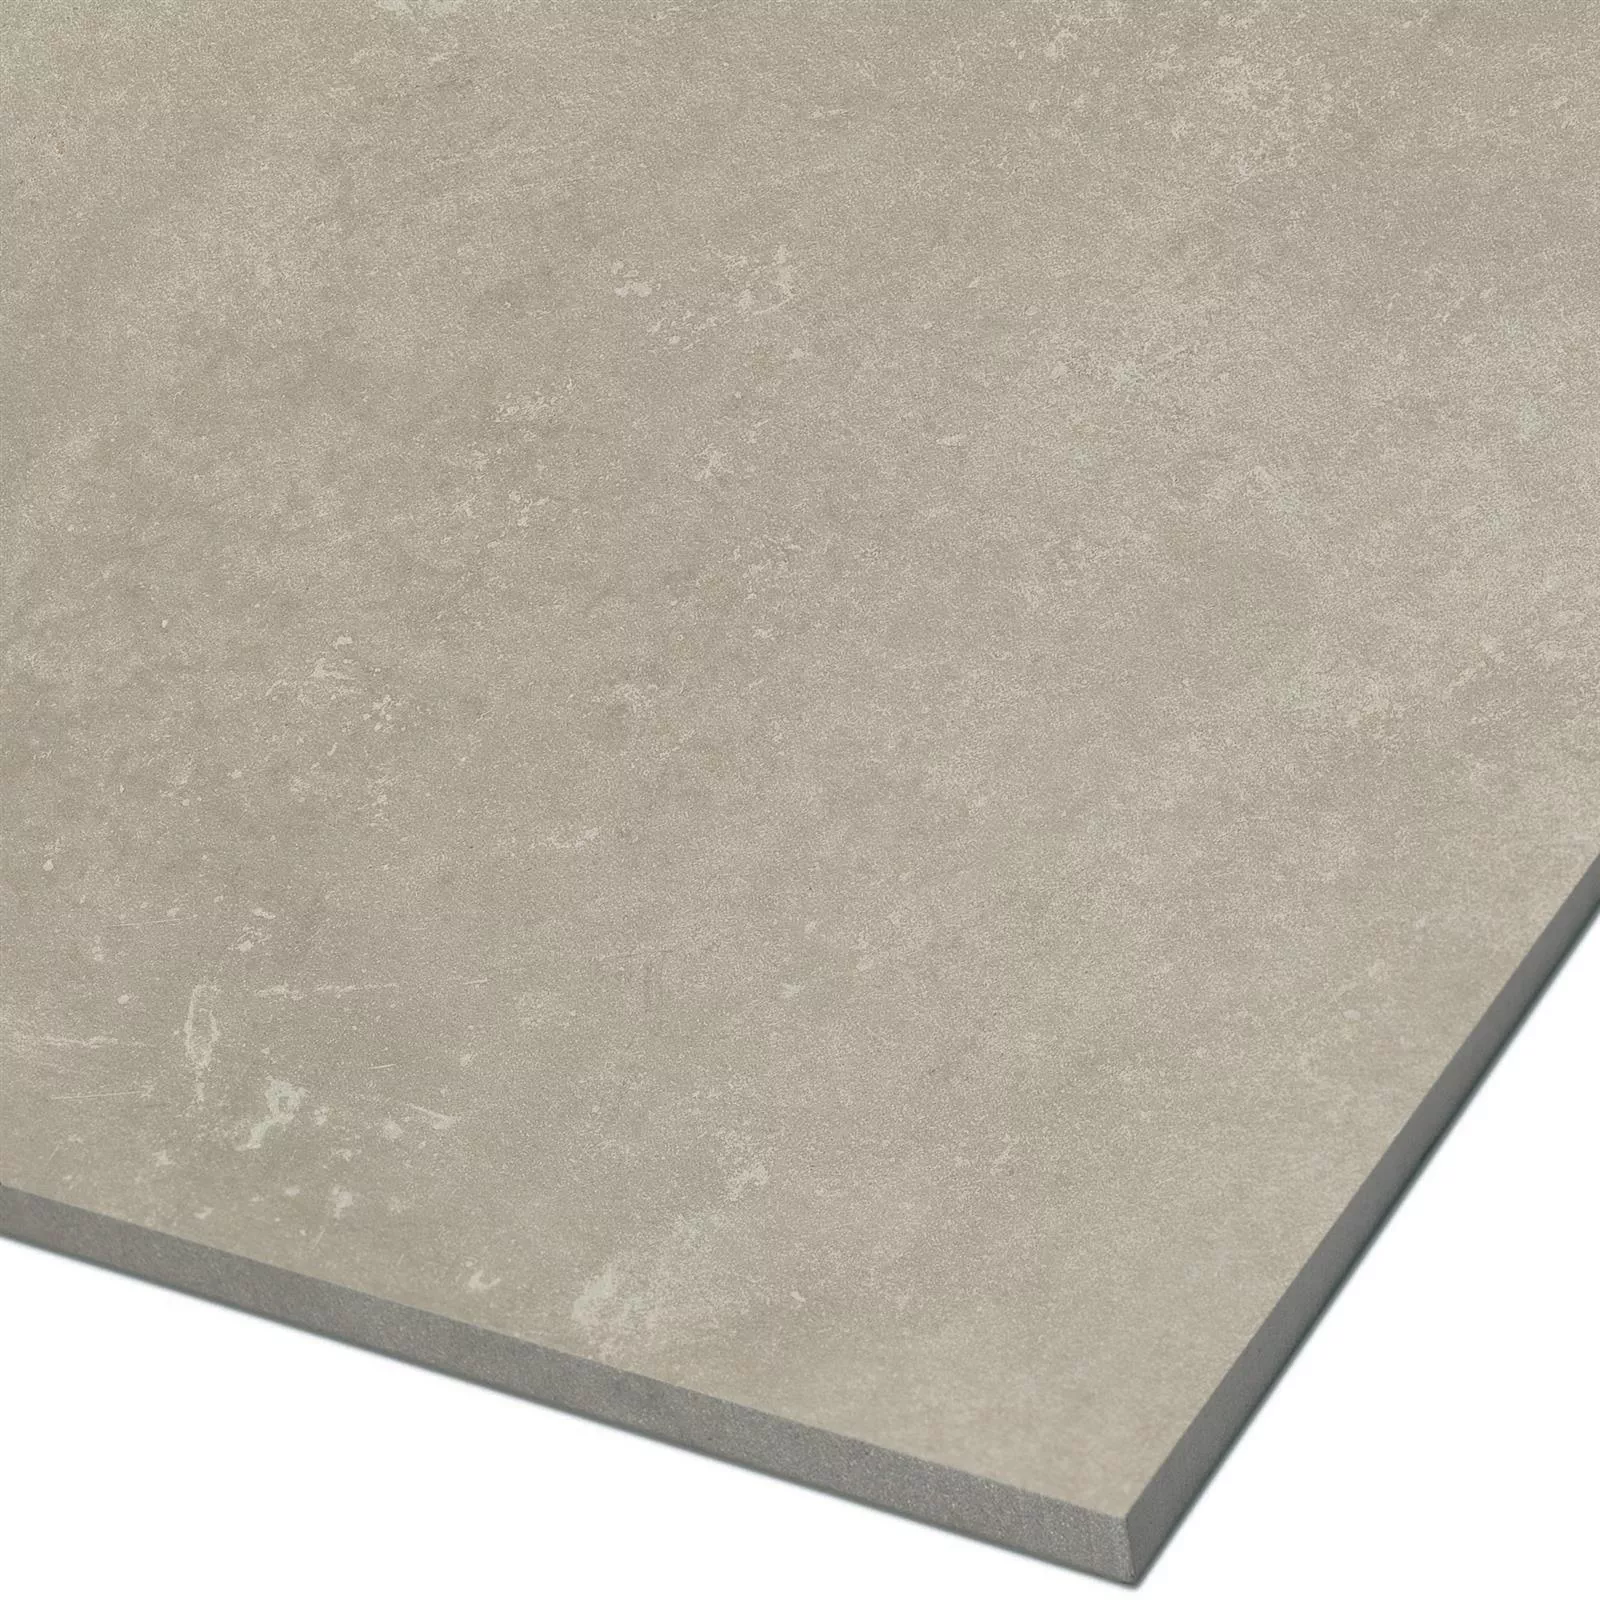 Vloertegels Cement Optic Nepal Slim Beige 30x60cm